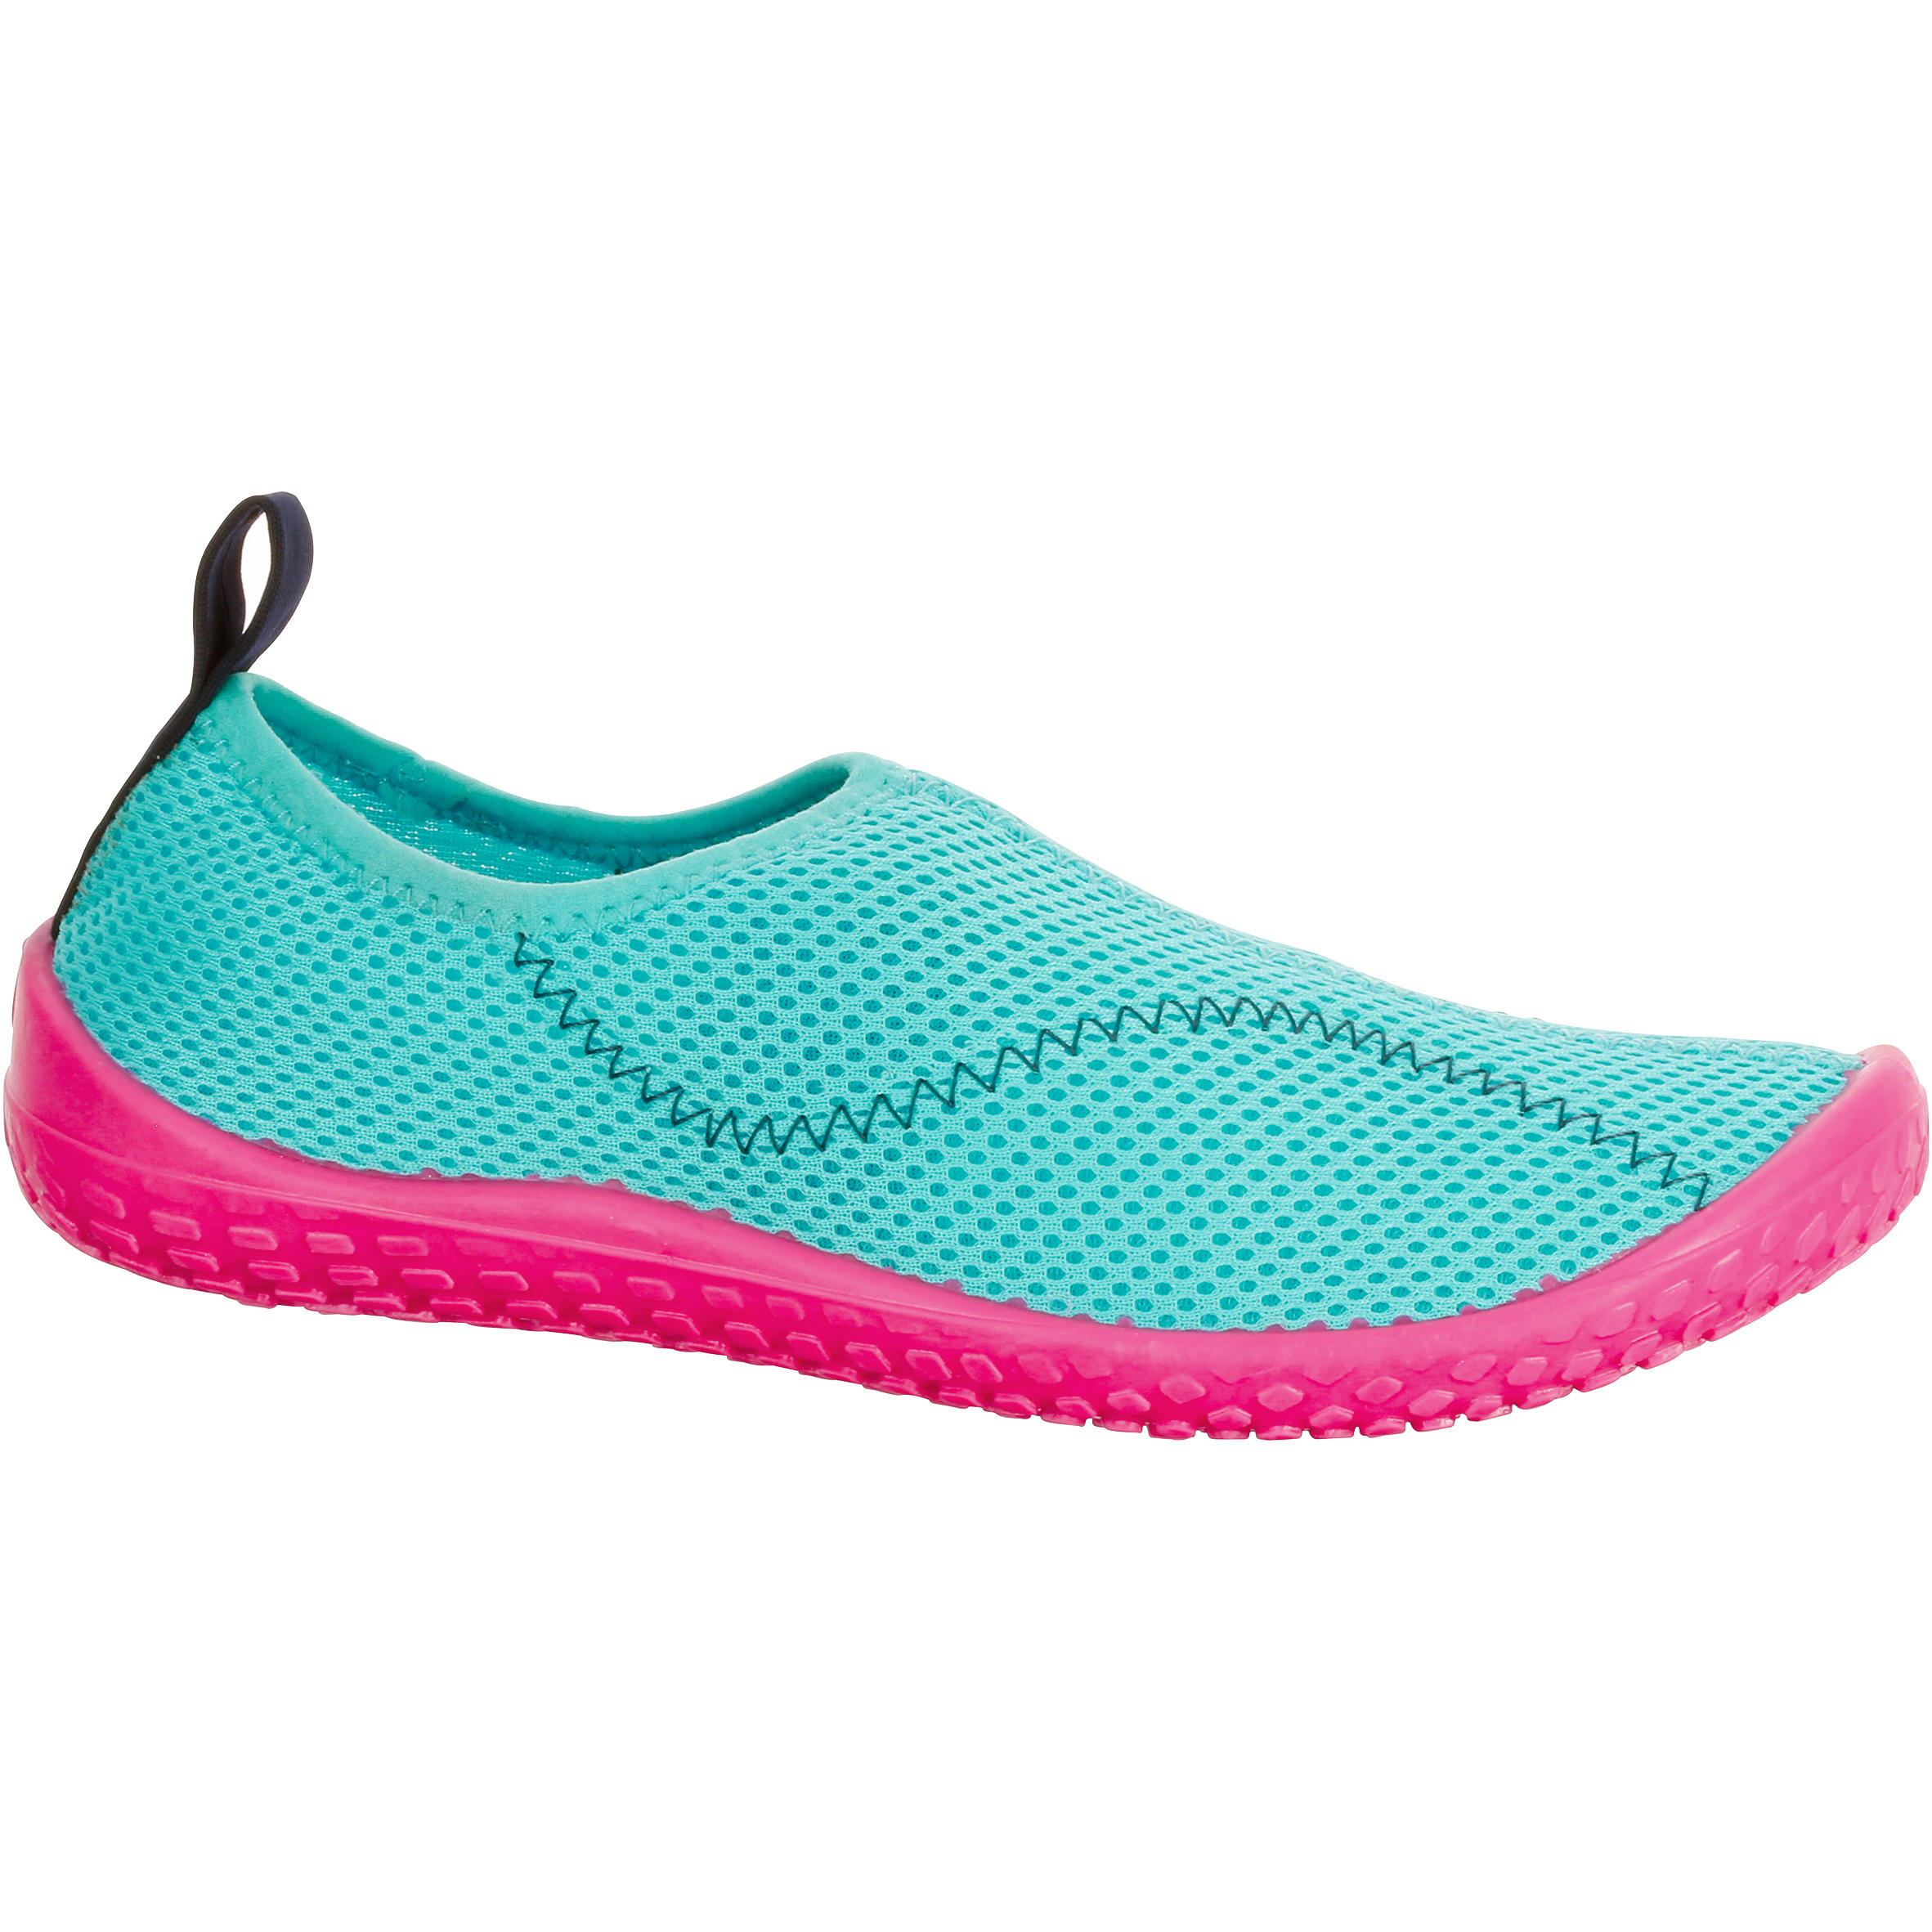 SUBEA Aquashoes for Kids - Aquashoes 100 - Turquoise and Pink